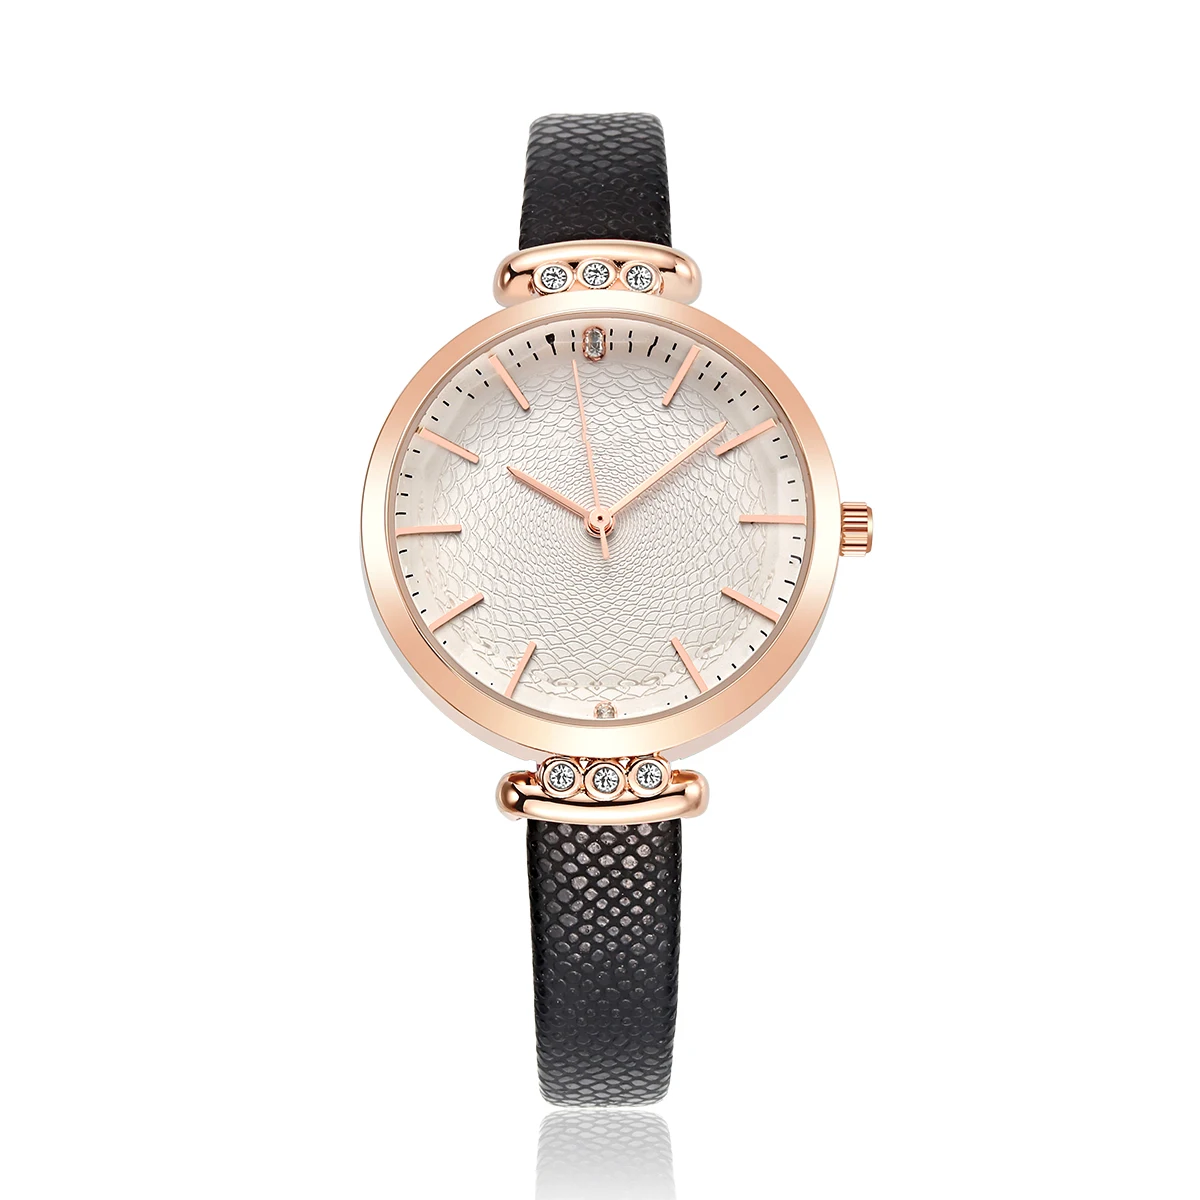 2021 Brand Fashion Watch Women Luxury Ceramic And Alloy Bracelet Analog Wristwatch Relogio Feminino Montre relogio Clock NO.2